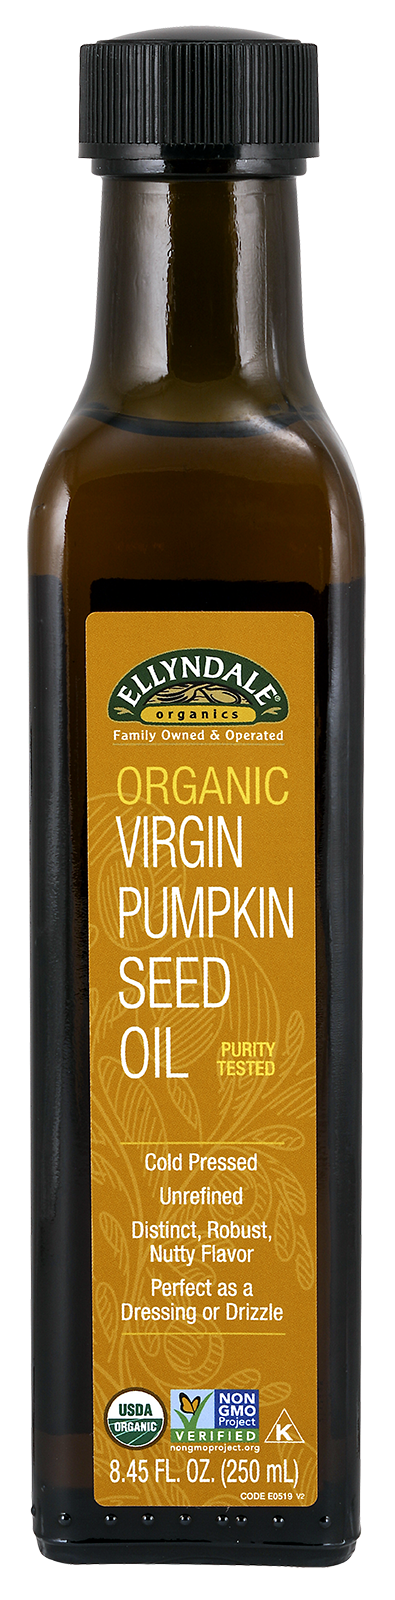 Virgin Pumpkin Seed Oil, Organic - 8.45 oz.